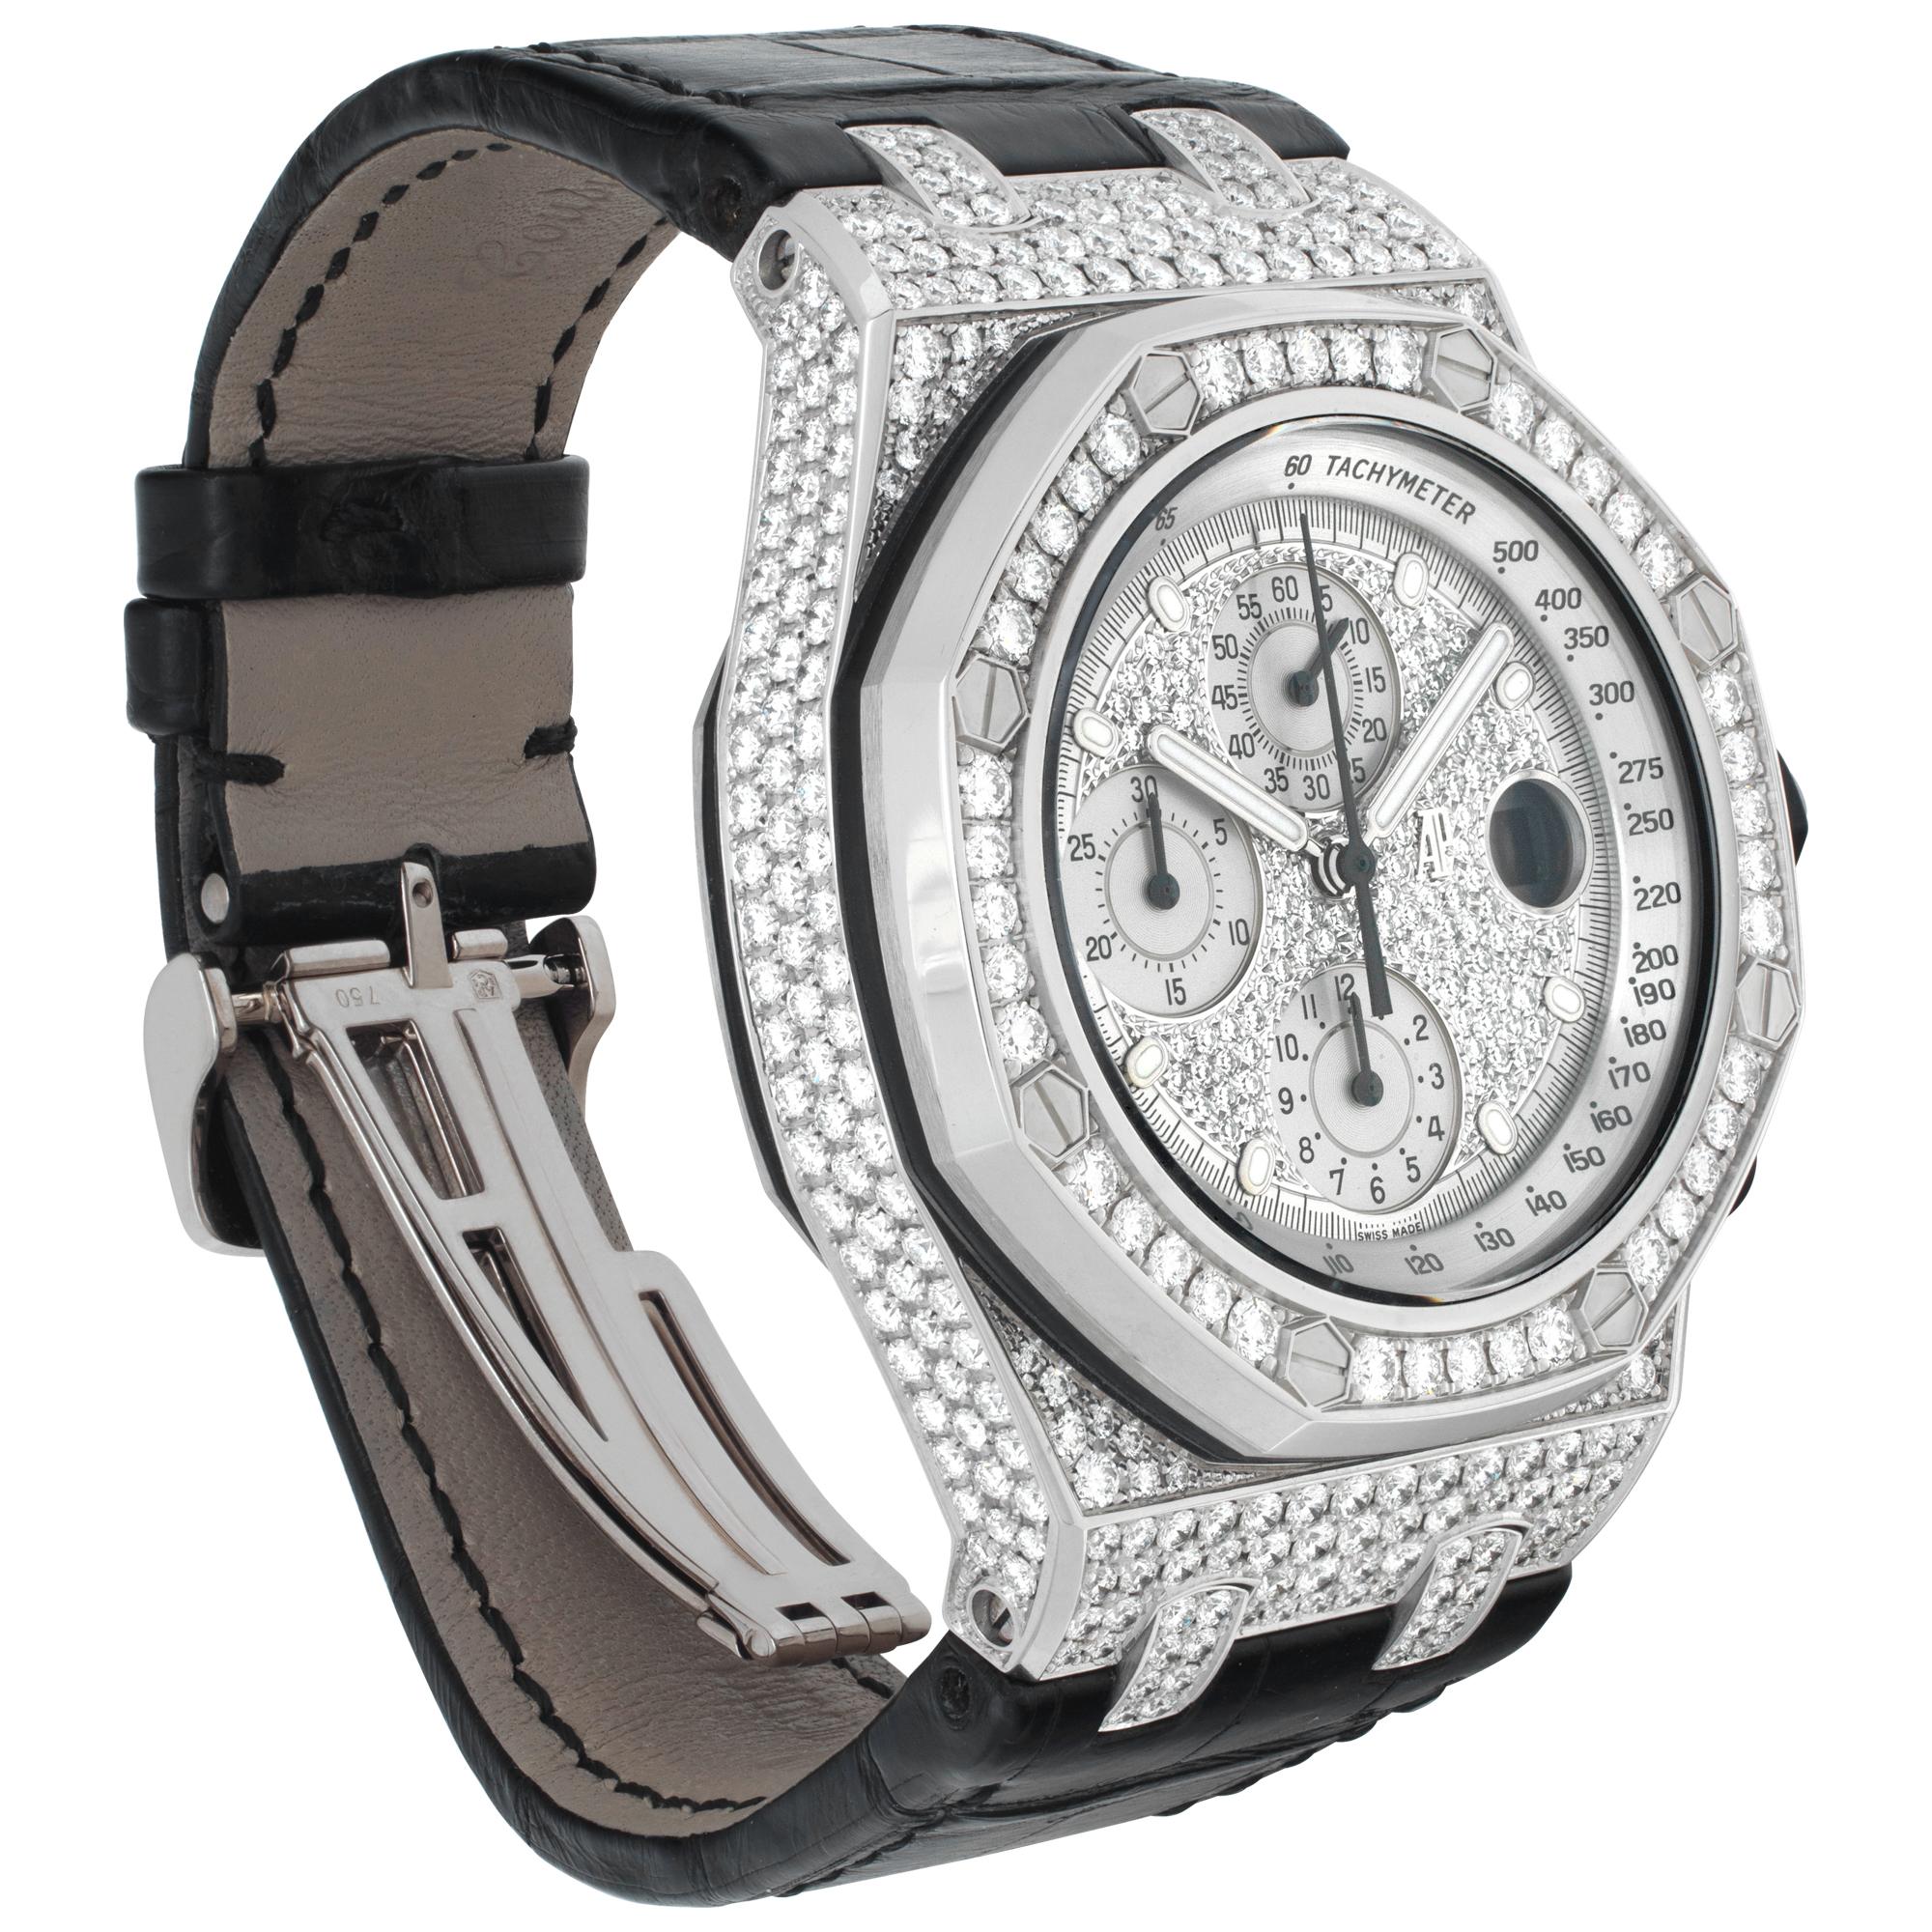 Audemars Piguet Royal Oak Offsho dial 42 mm watch In Excellent Condition For Sale In Surfside, FL